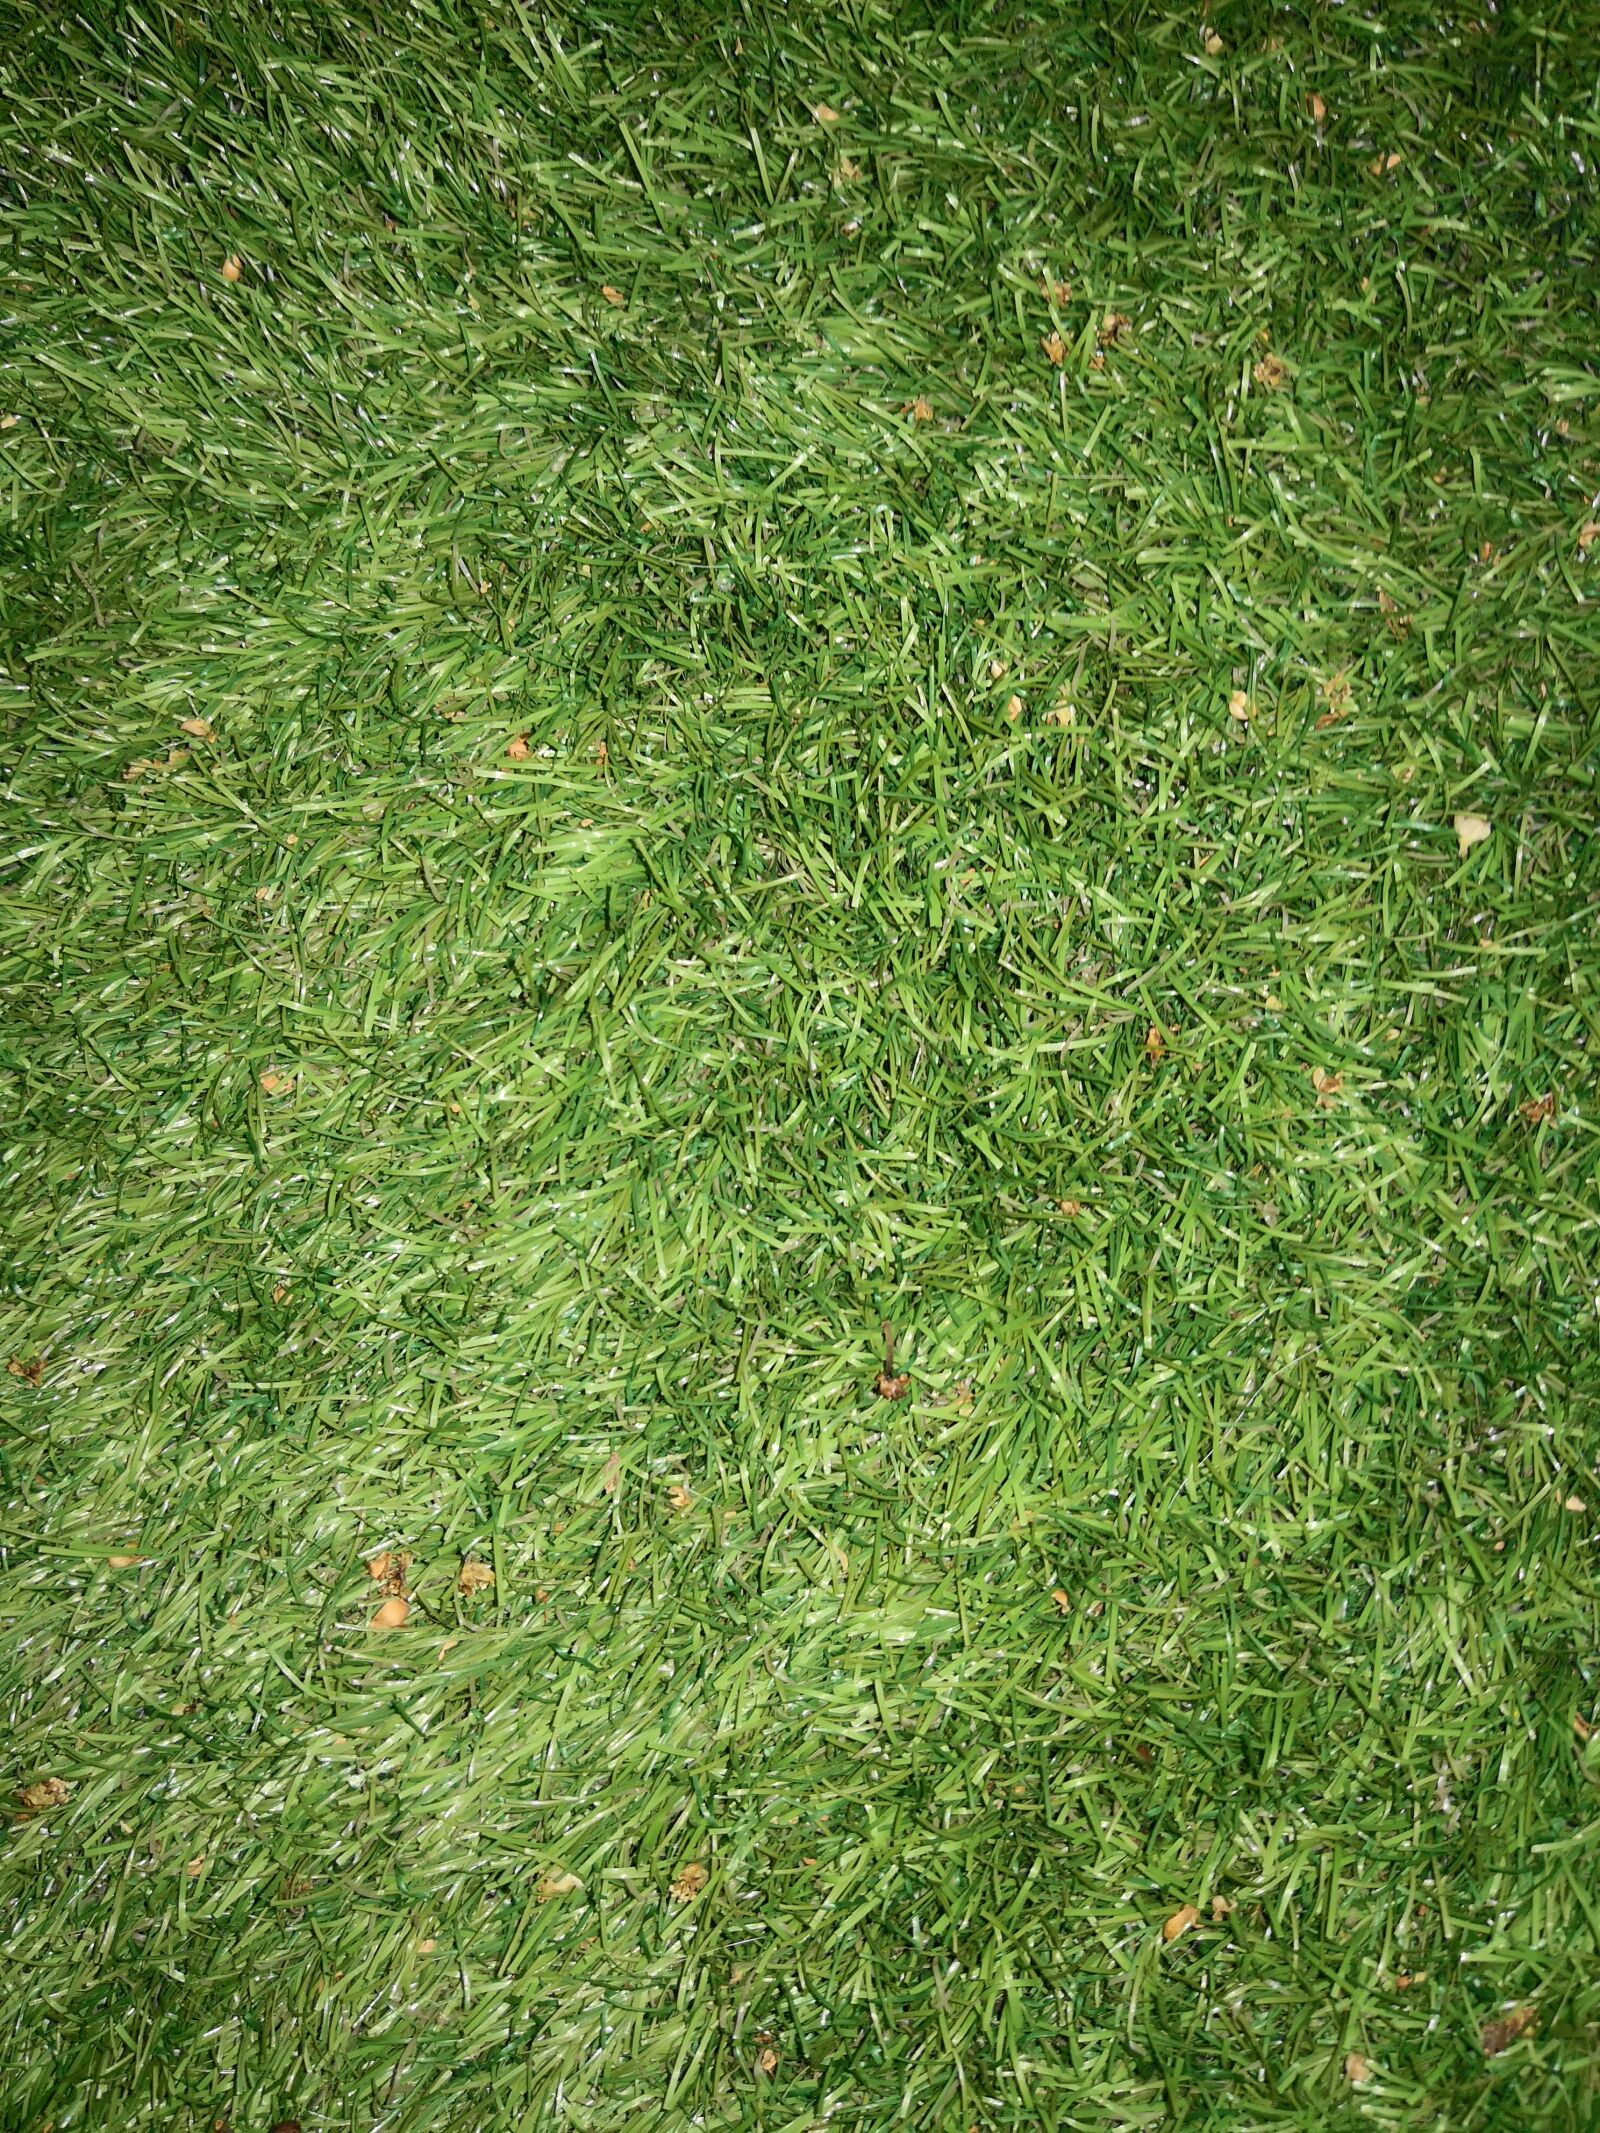 HUAWEI Mate 10 Pro sample photo. Fake grass, plants, turf photography